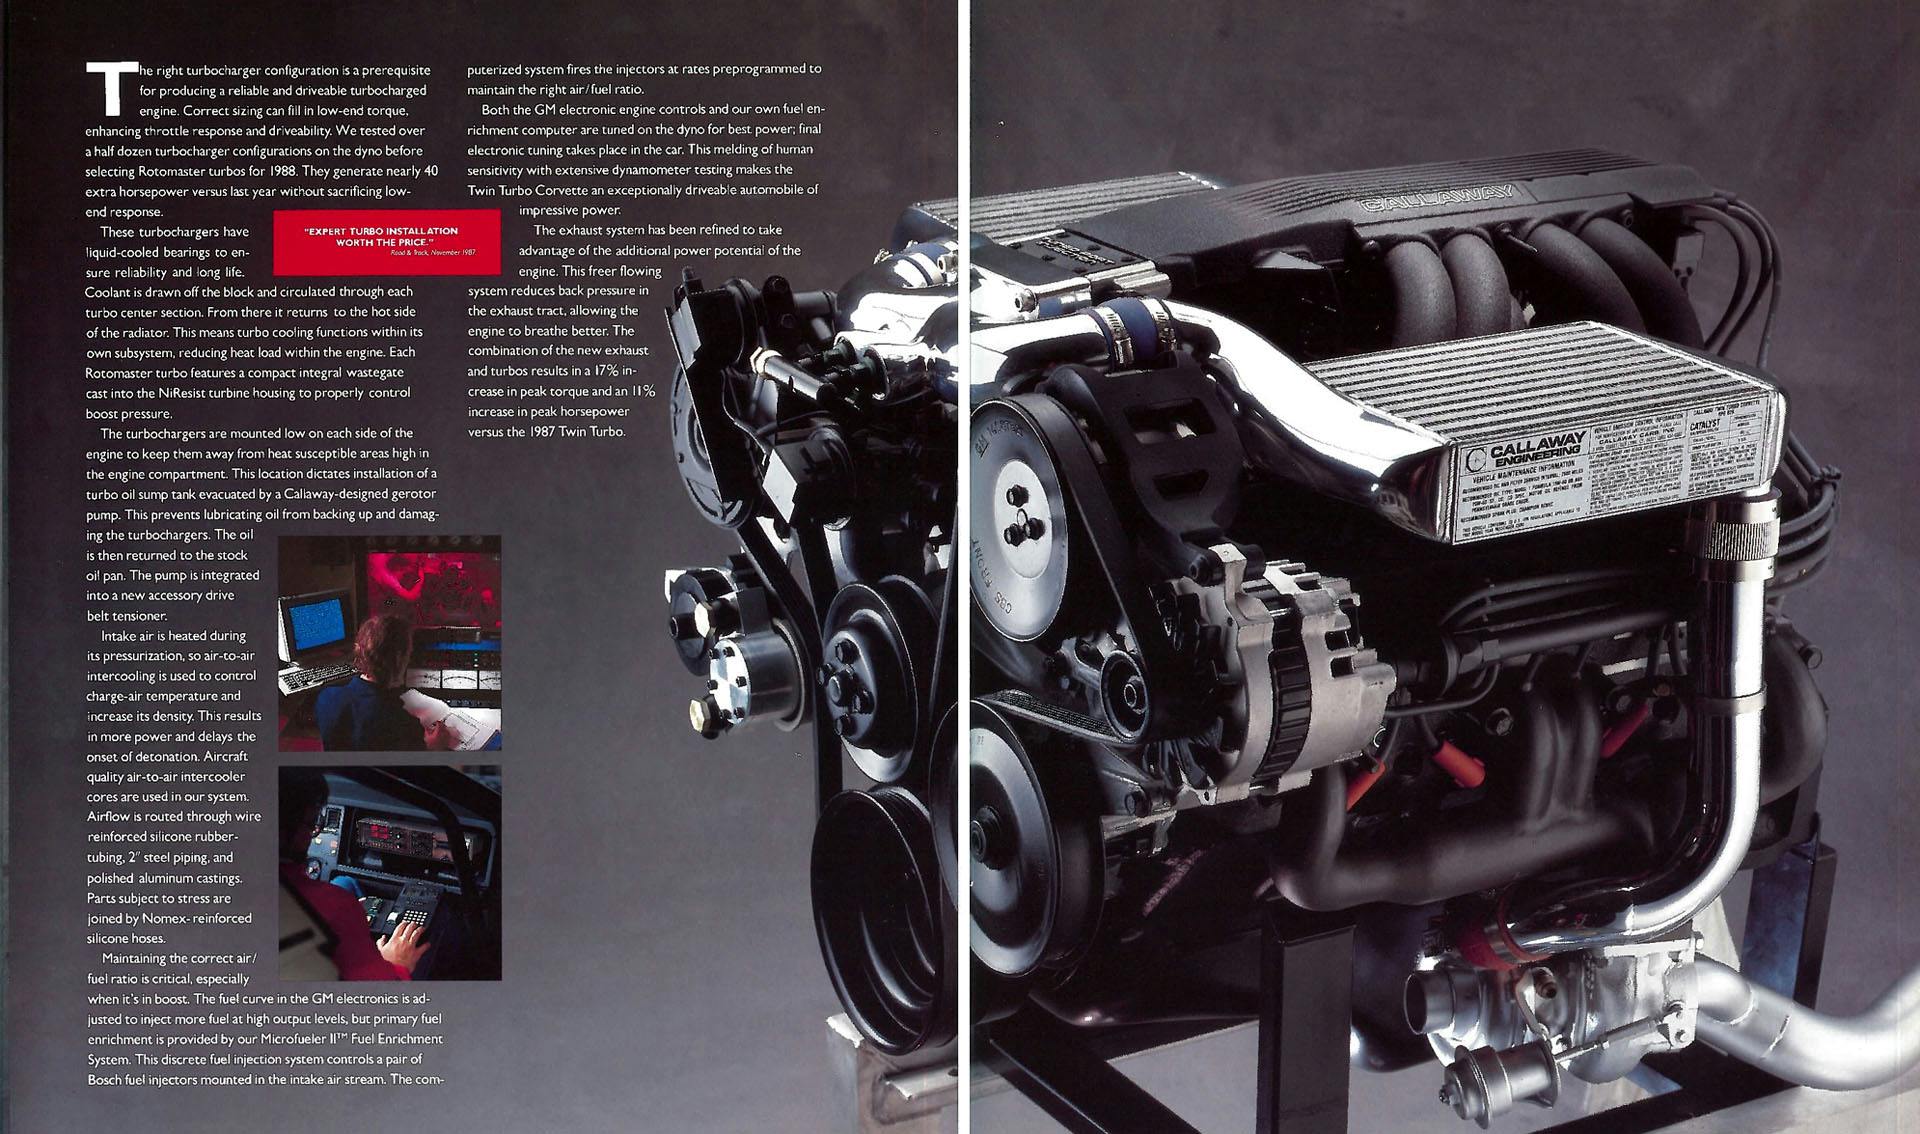 1988 Chevrolet Corvette Callaway Twin Turbo brochure